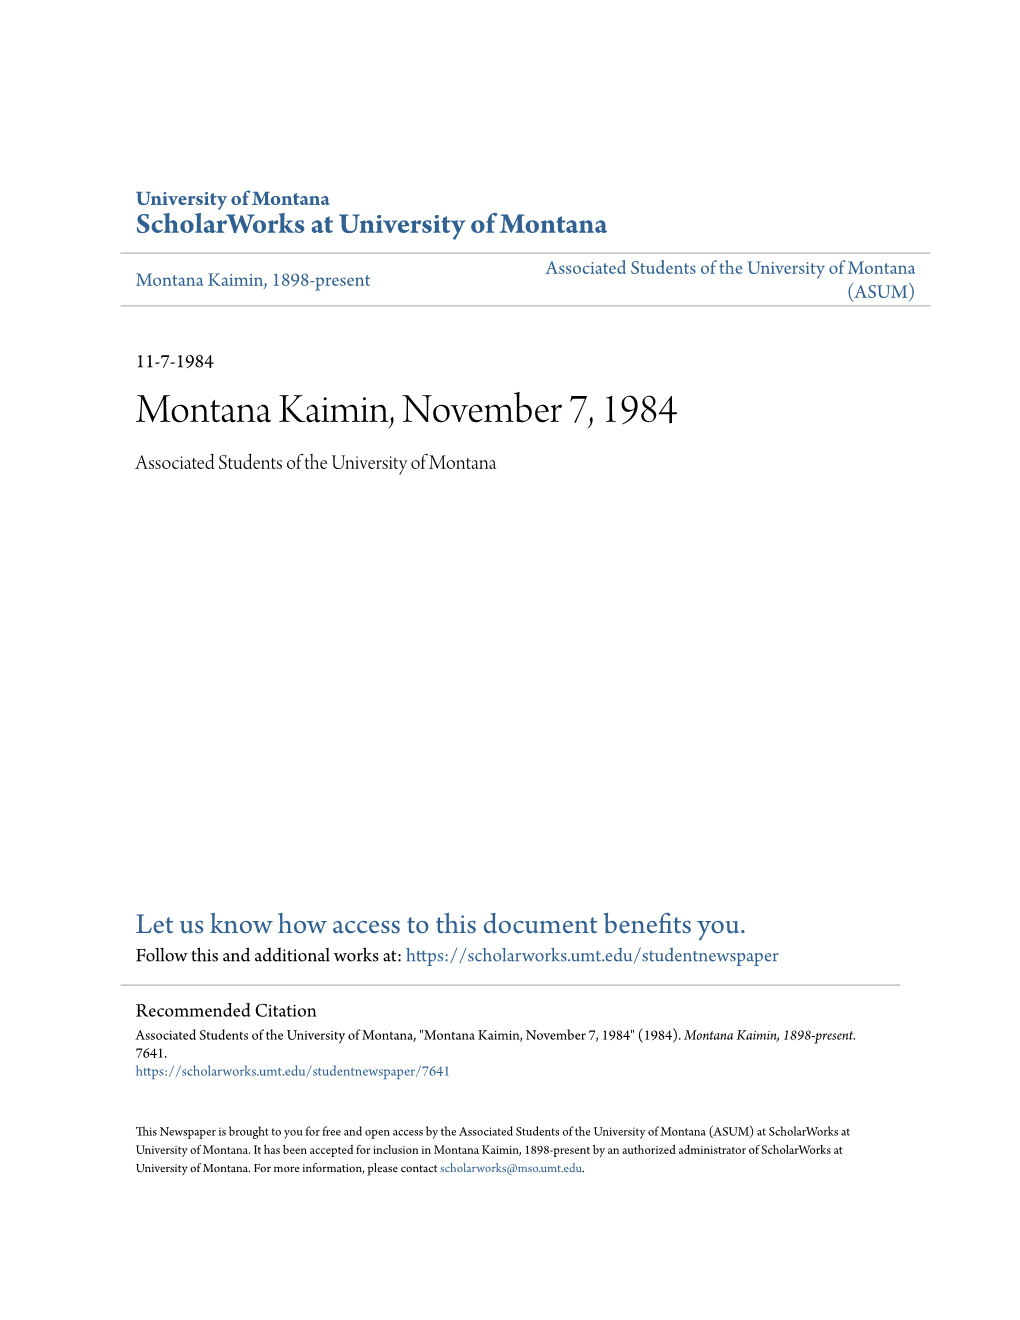 Montana Kaimin, November 7, 1984 Associated Students of the University of Montana